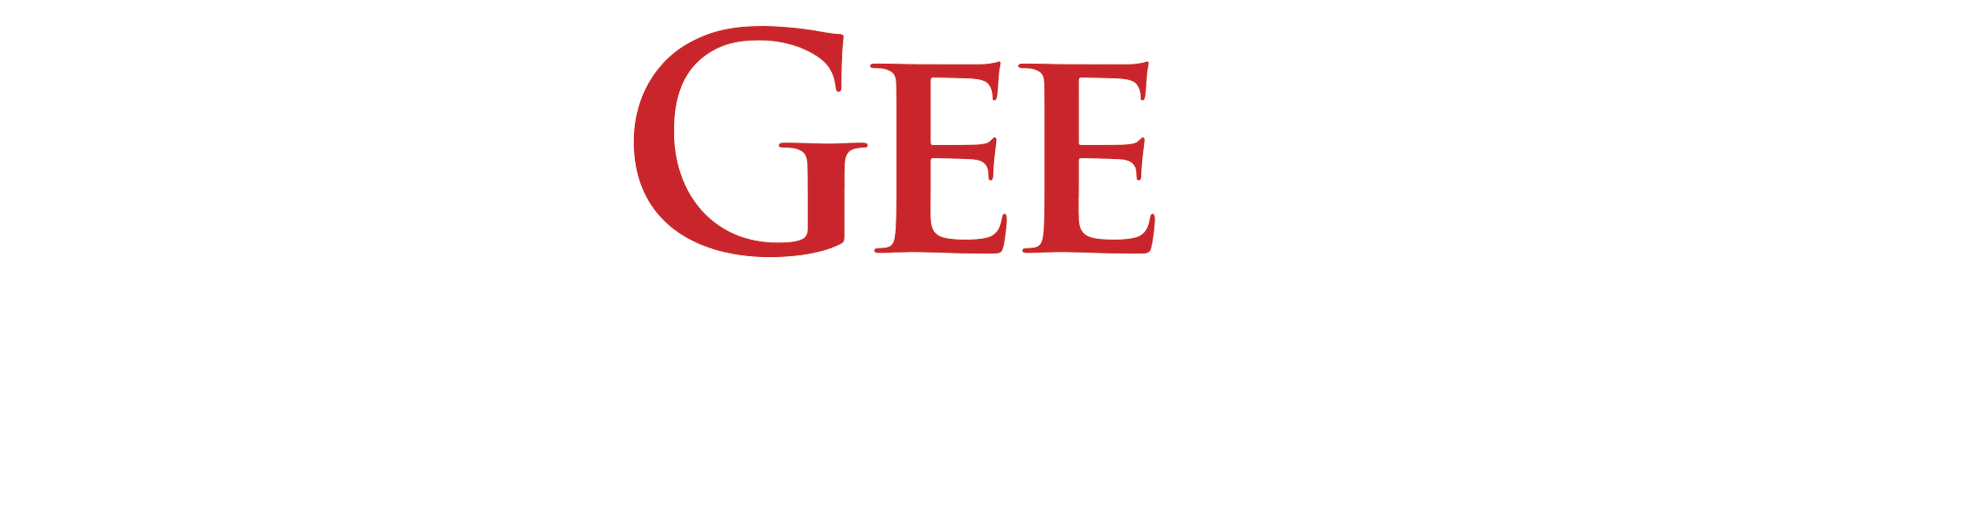 Gee CDA logo